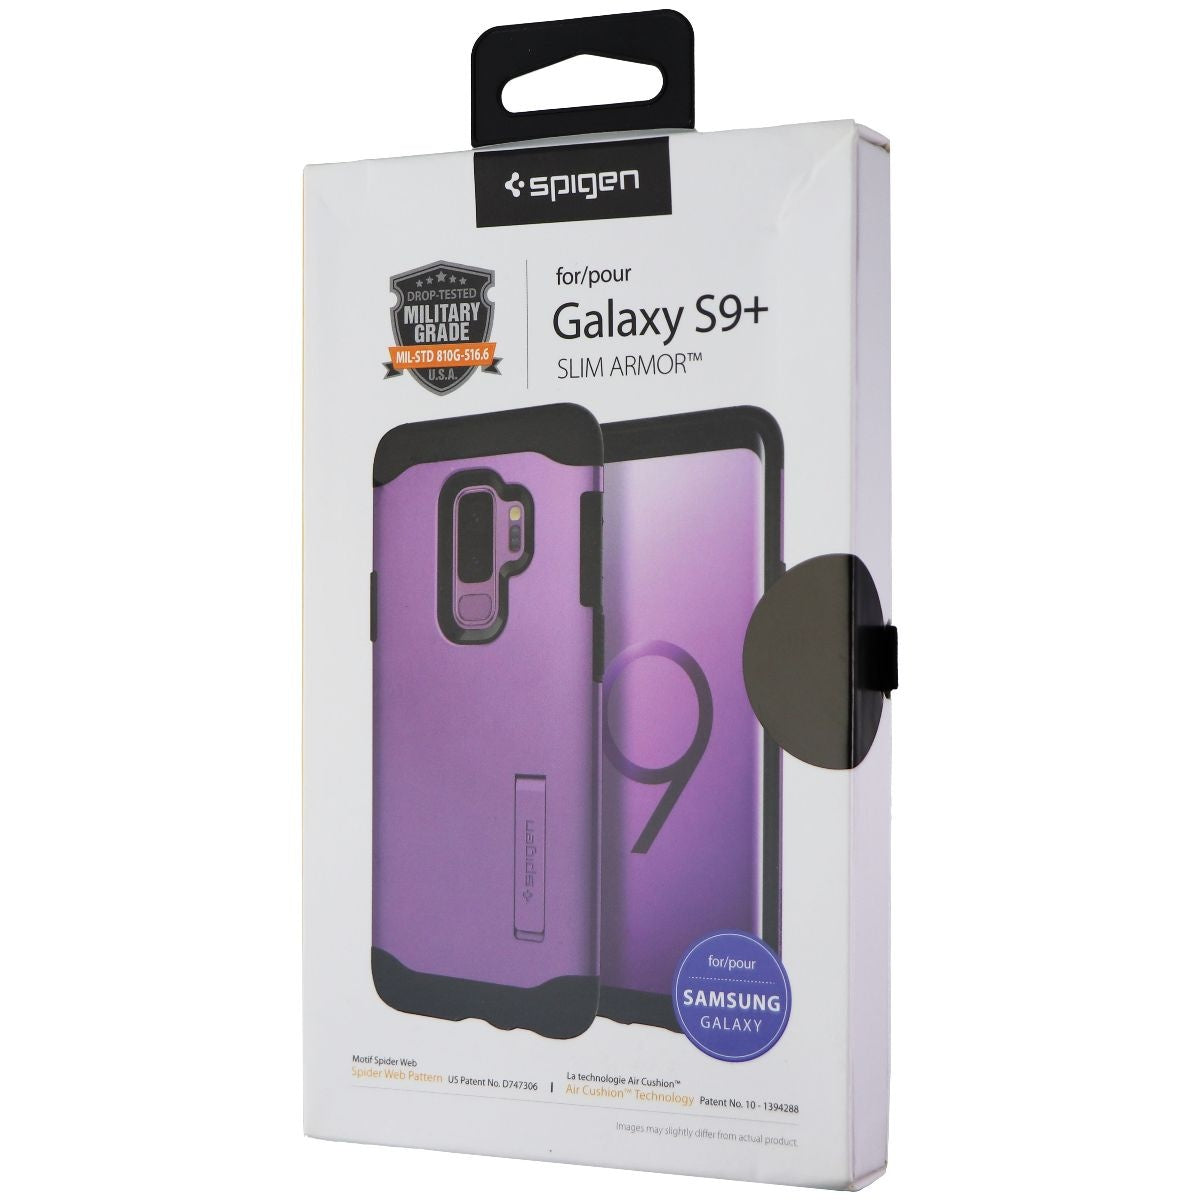 Spigen Slim Armor Dual Layer Case for Samsung Galaxy (S9+) - Lilac Purple